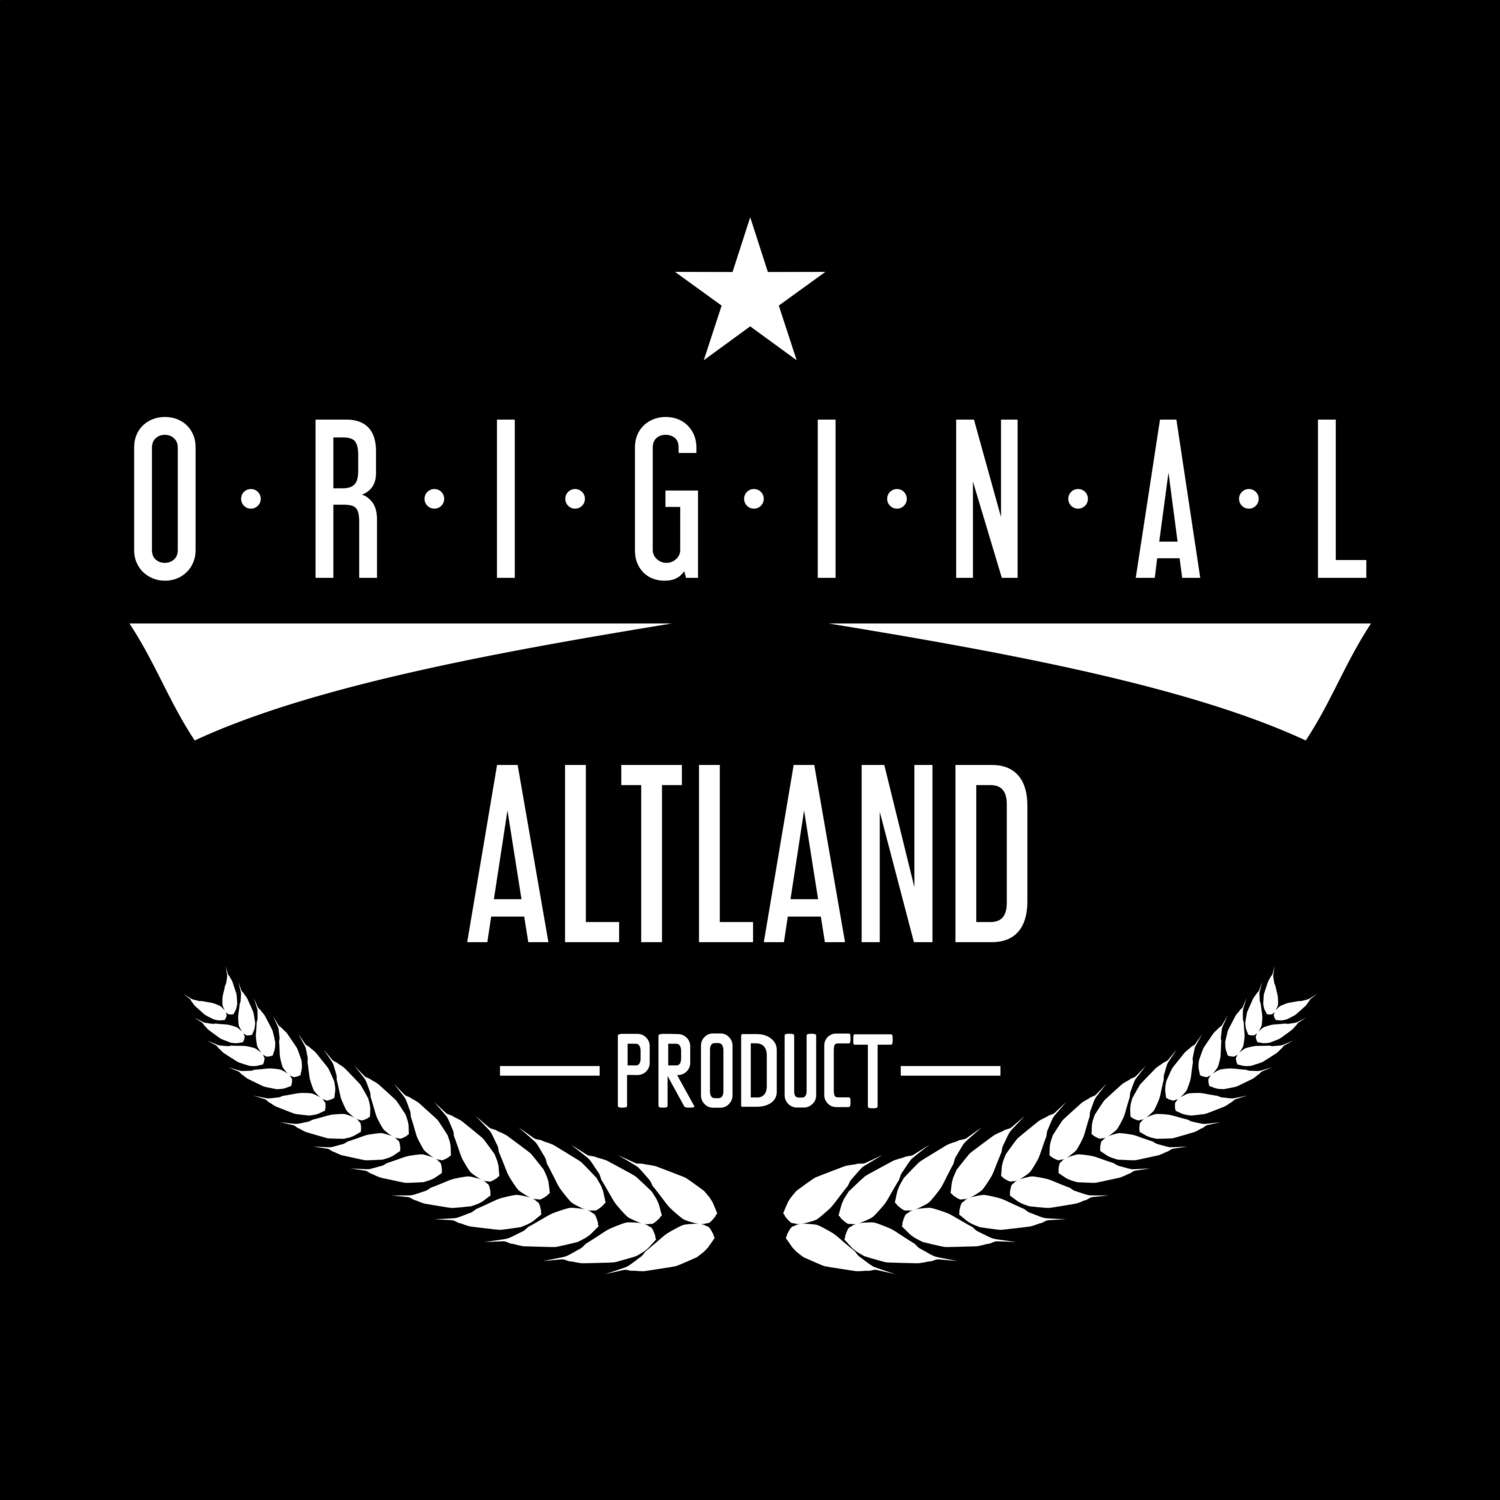 Altland T-Shirt »Original Product«